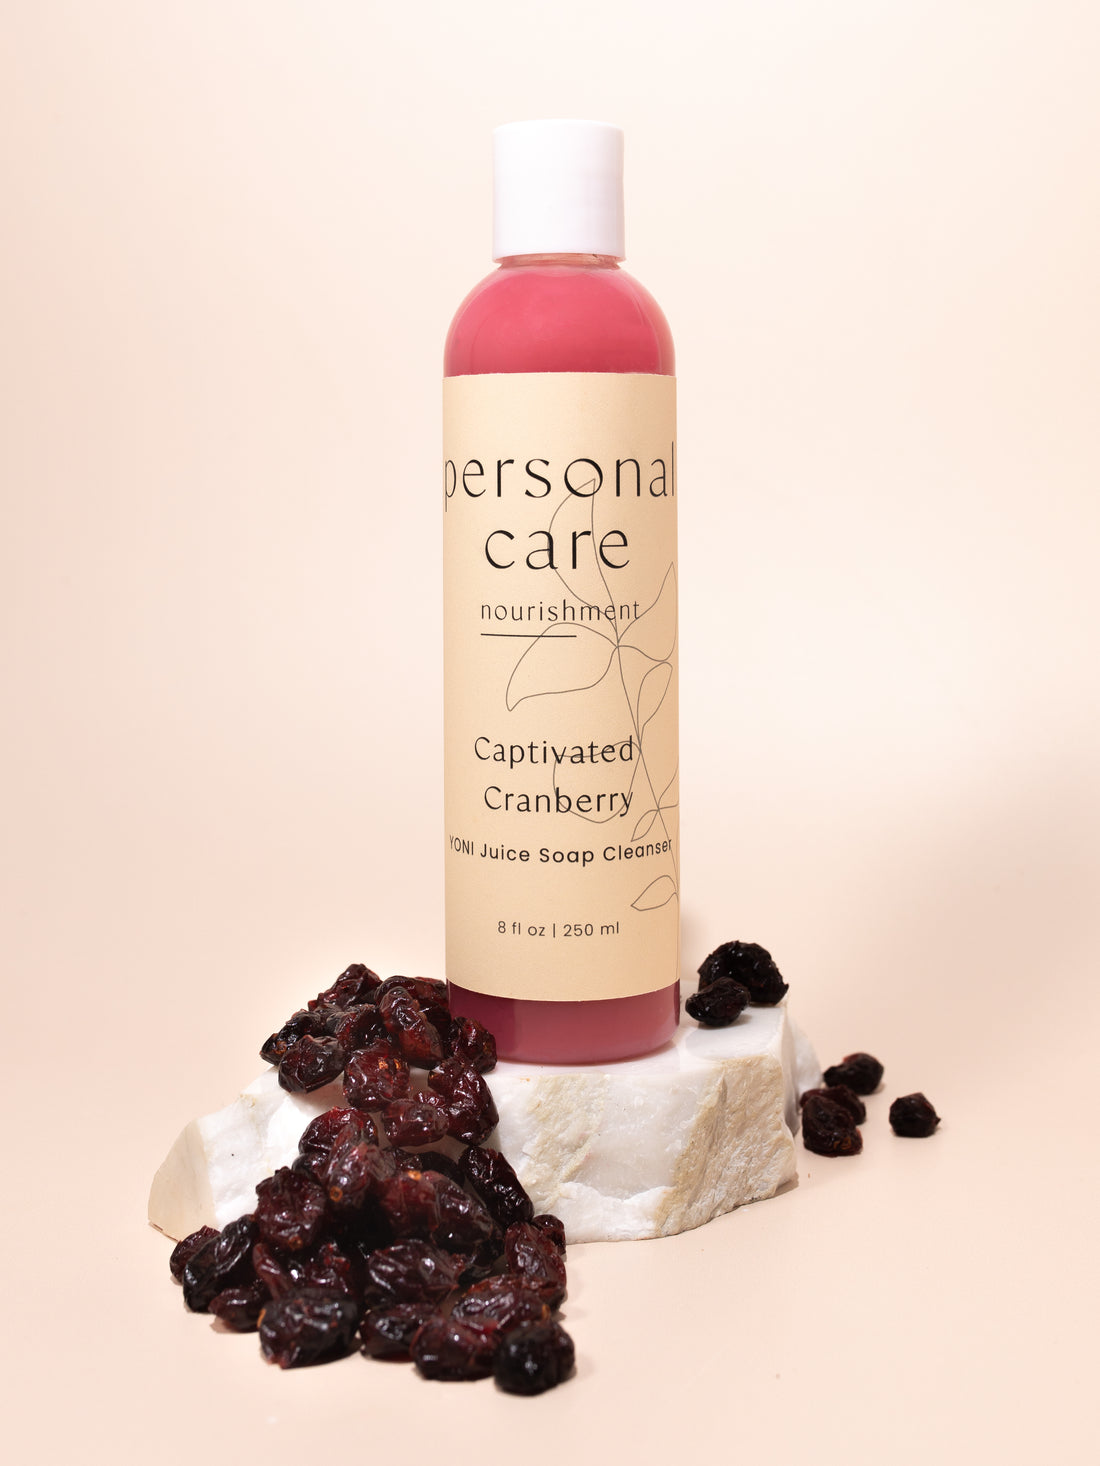 Captivated Cranberry - YONI Juice Soap Cleanser